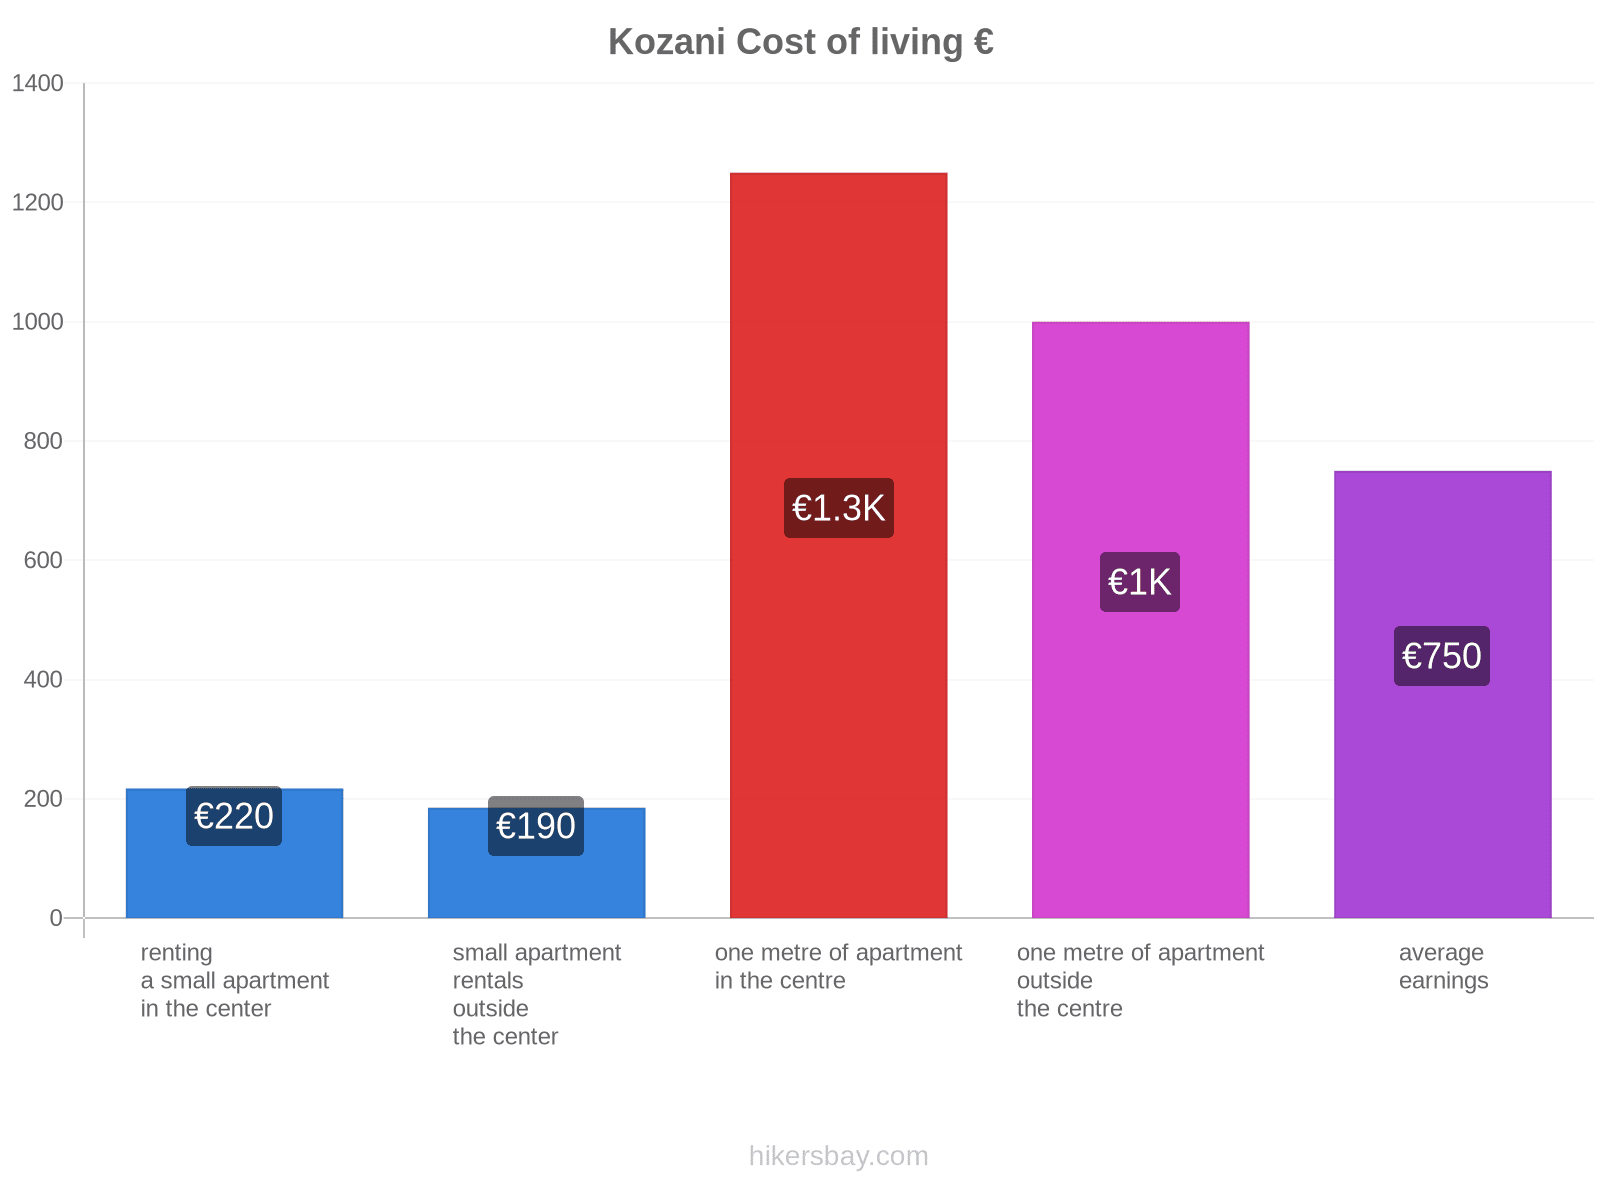 Kozani cost of living hikersbay.com